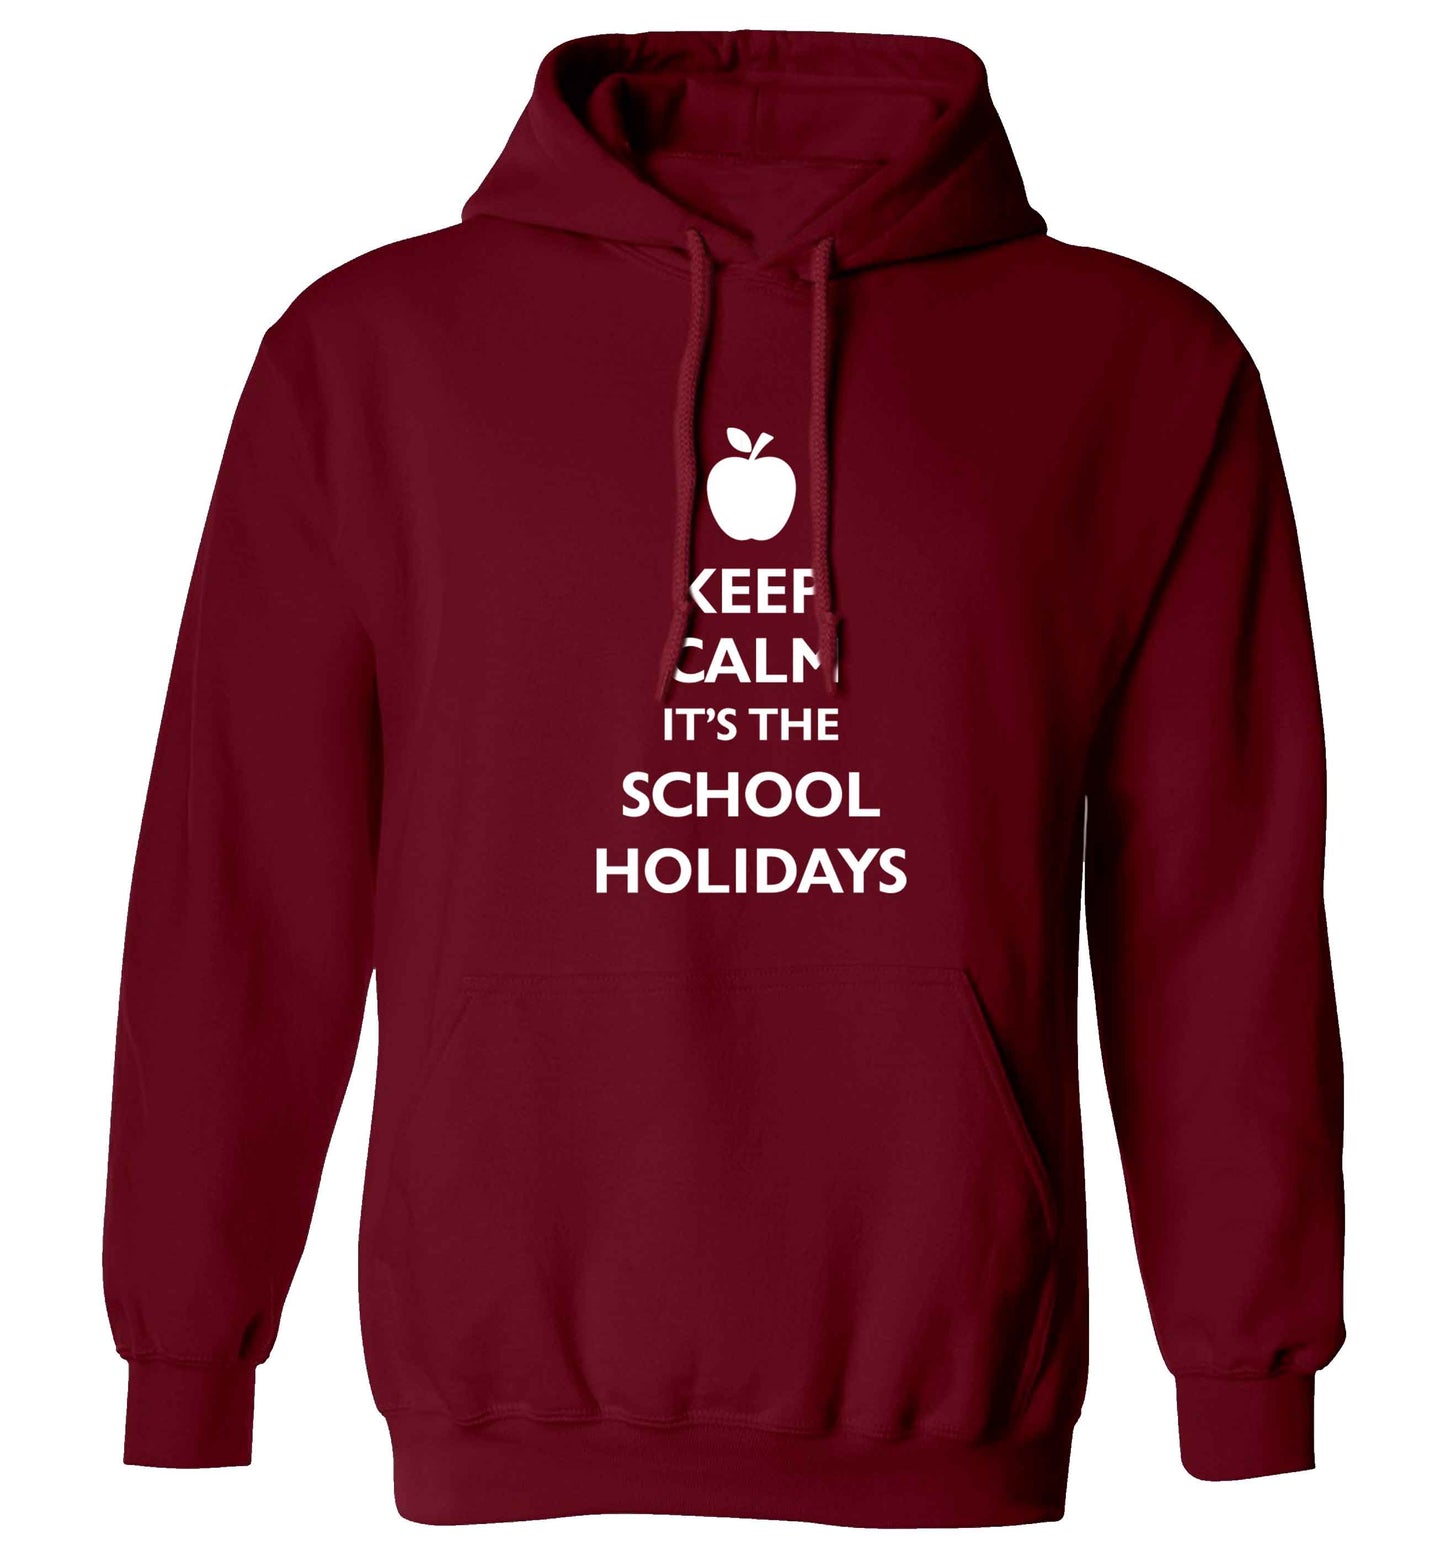 Keep calm it's the school holidays adults unisex maroon hoodie 2XL